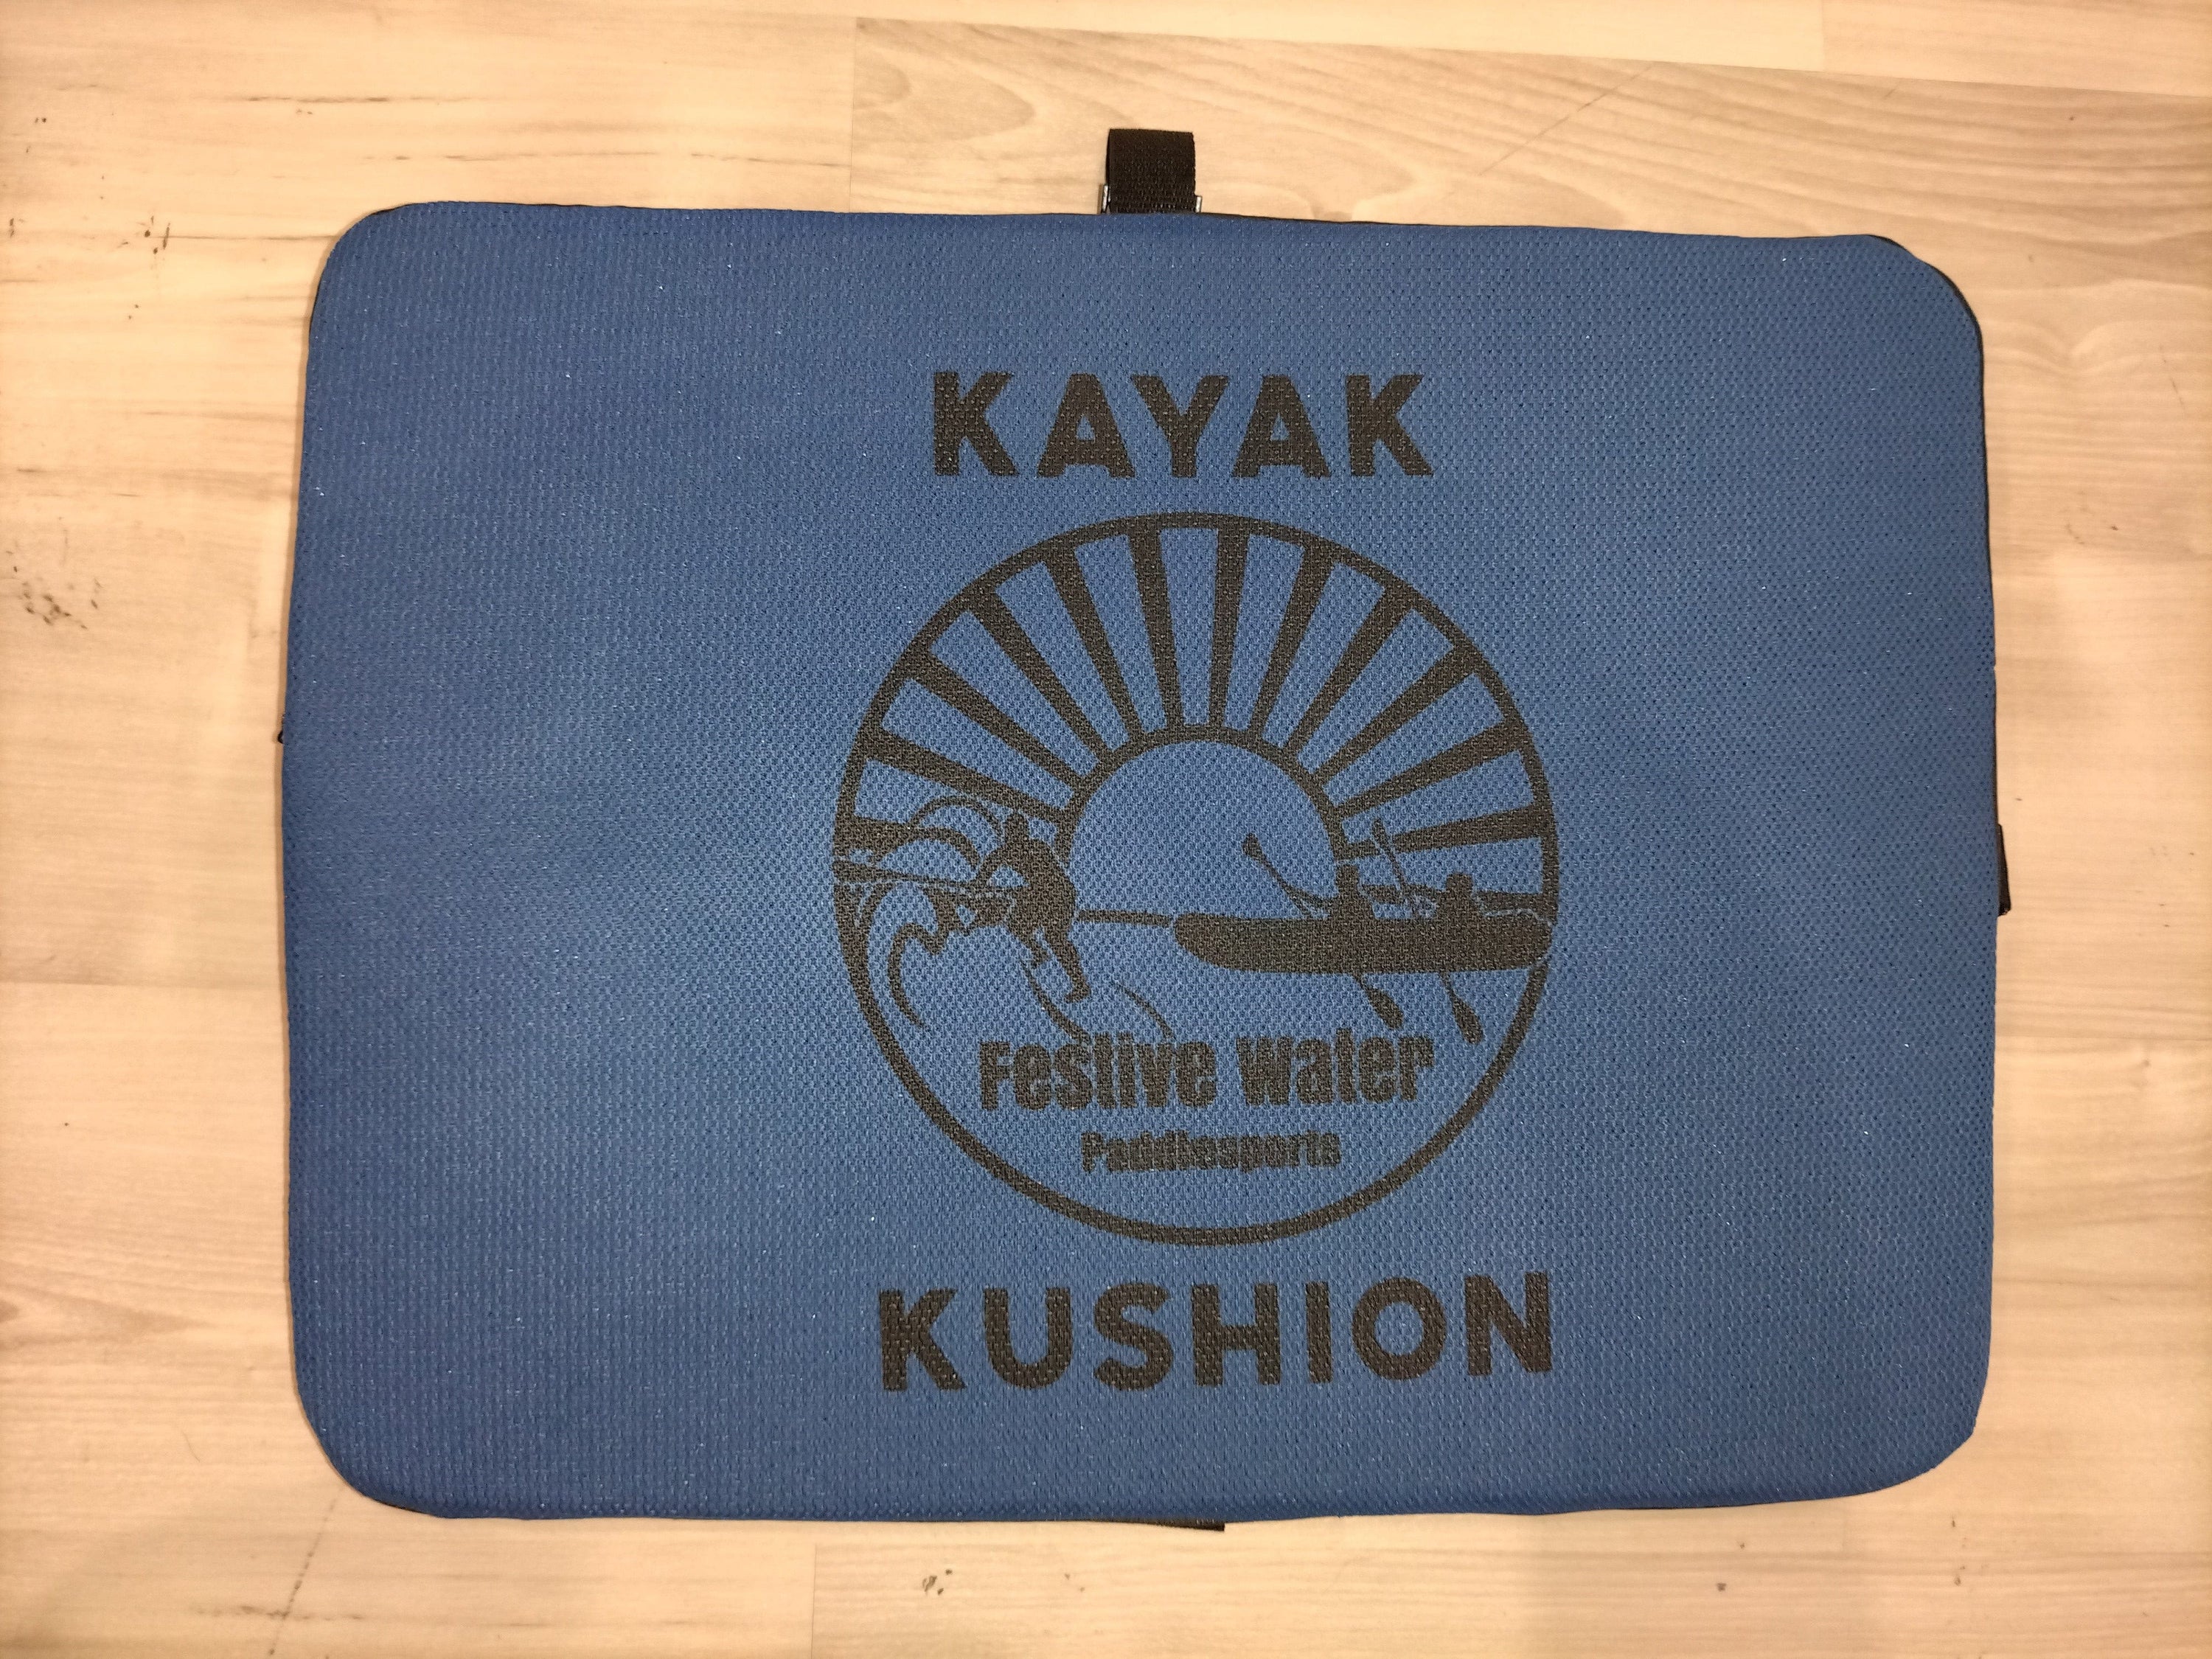 Festive Water Kayak Kushion